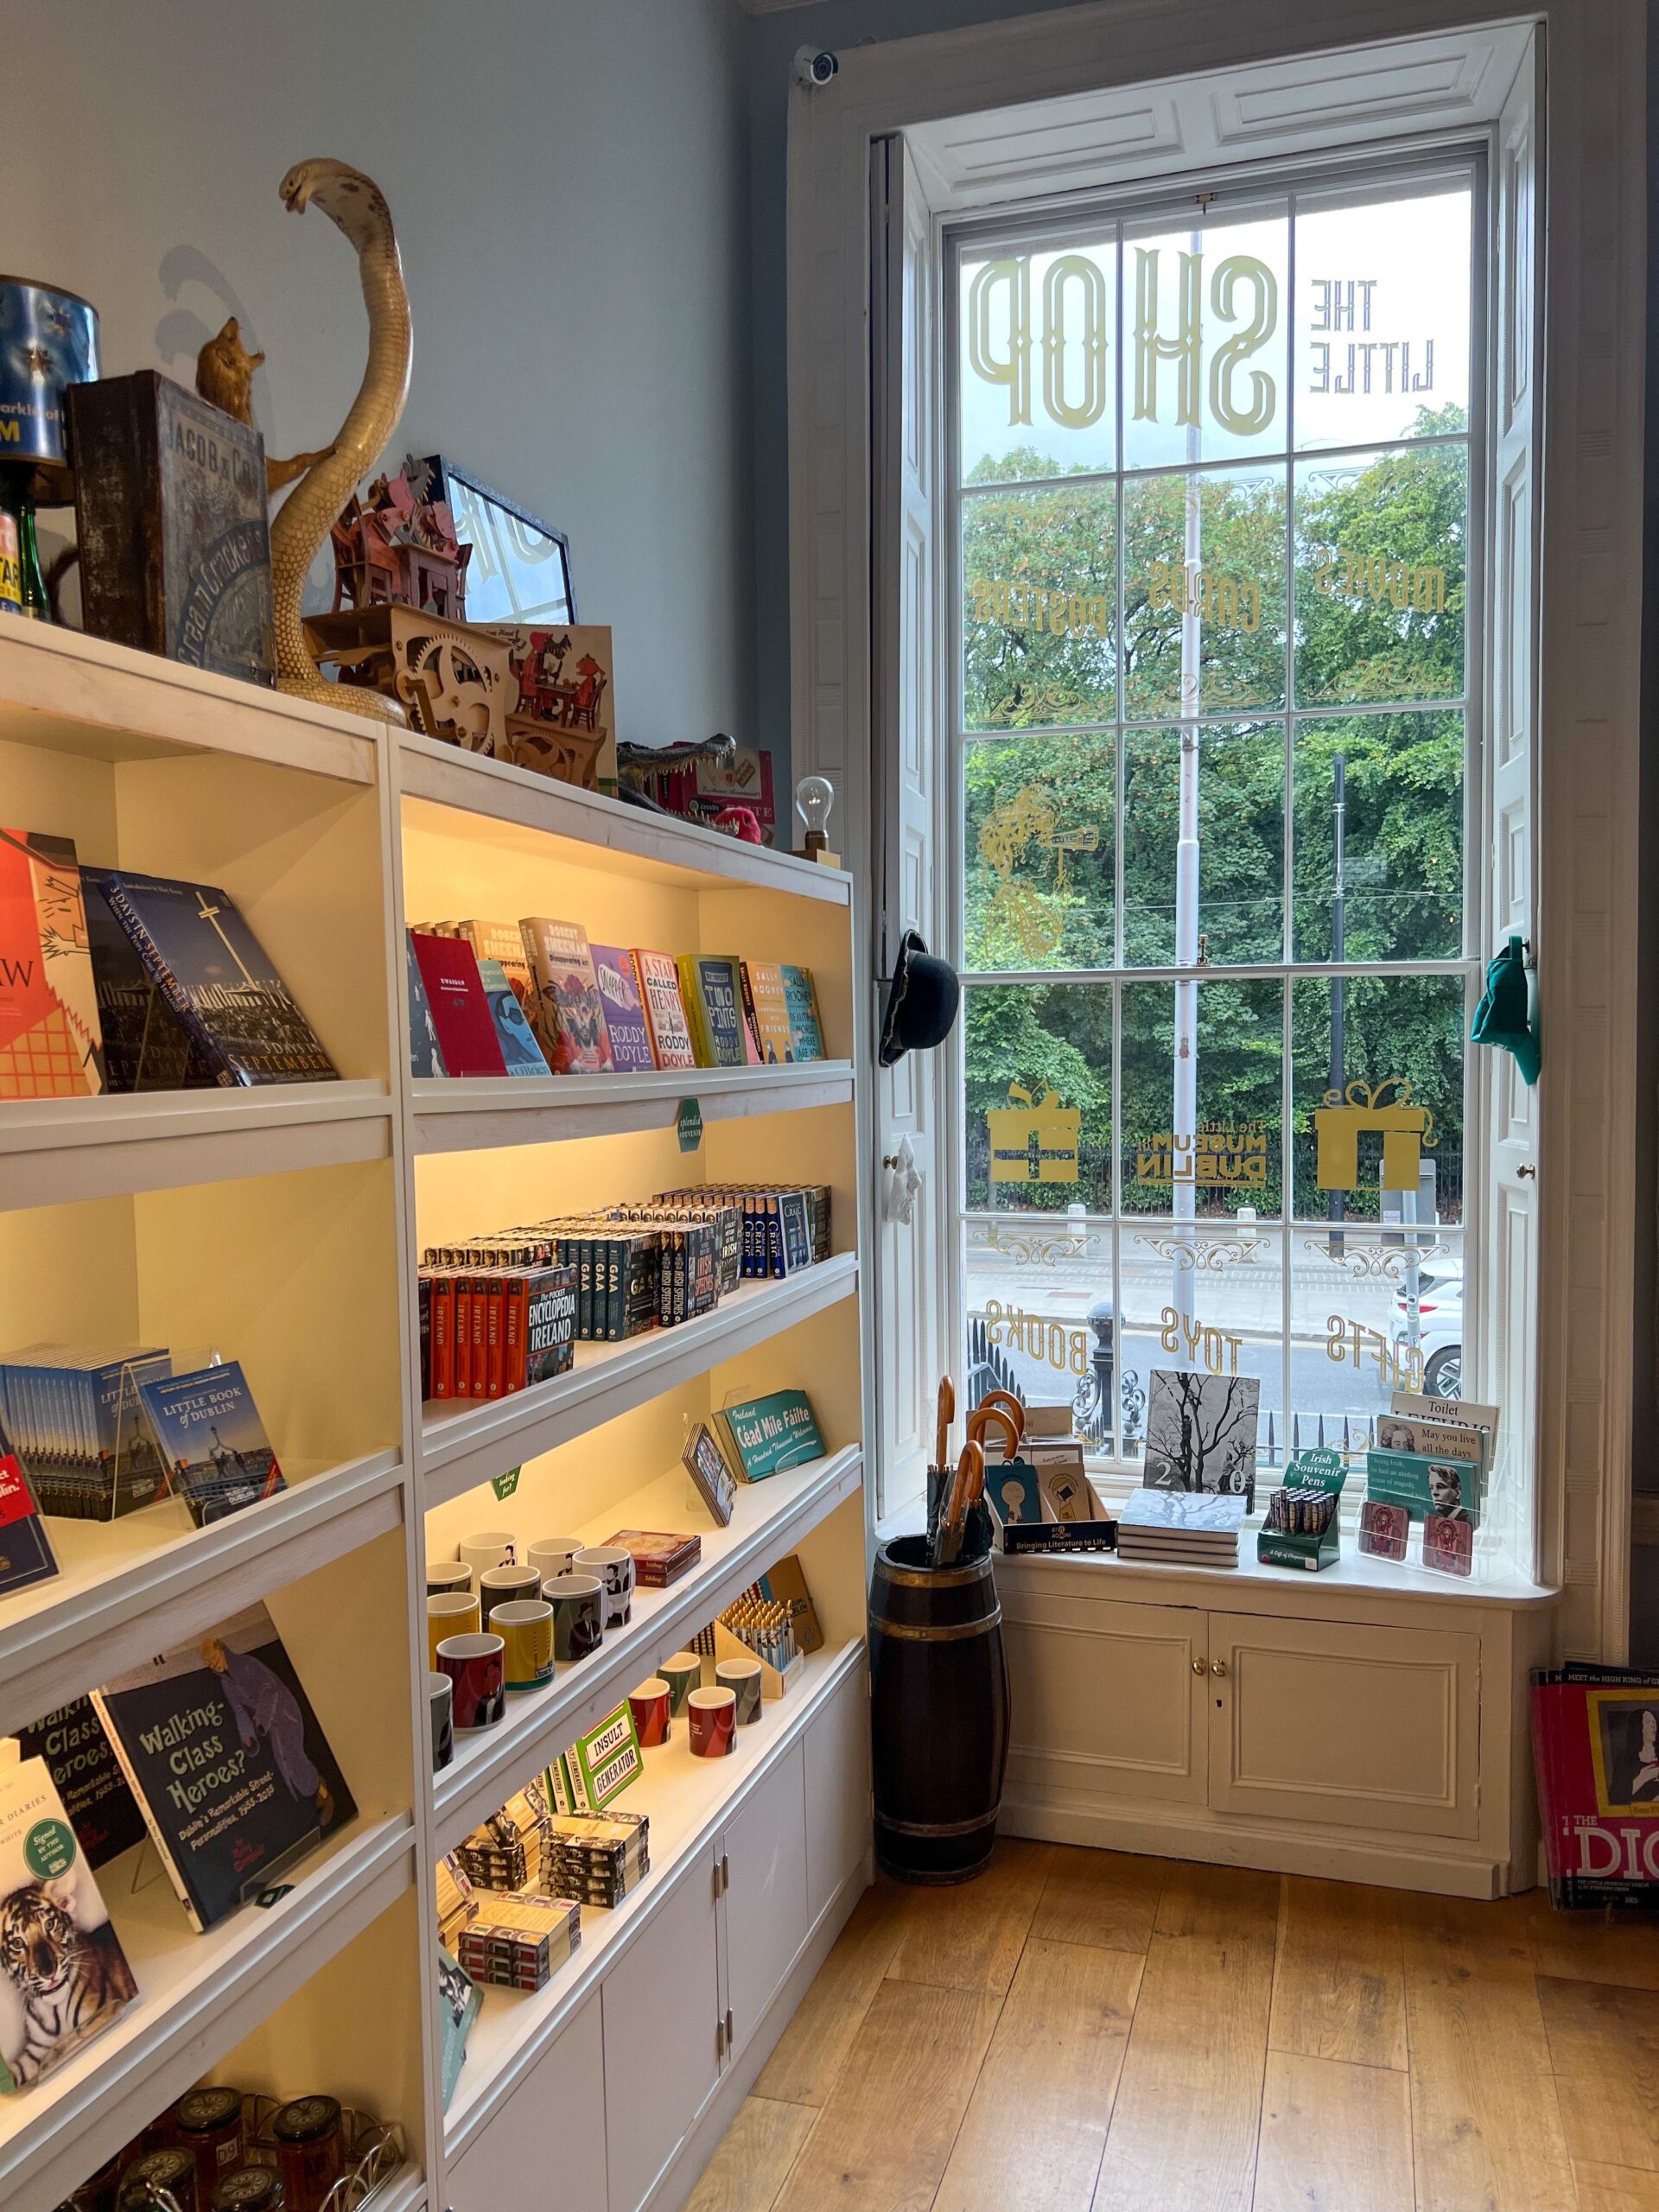 The Little Shop of Dublin